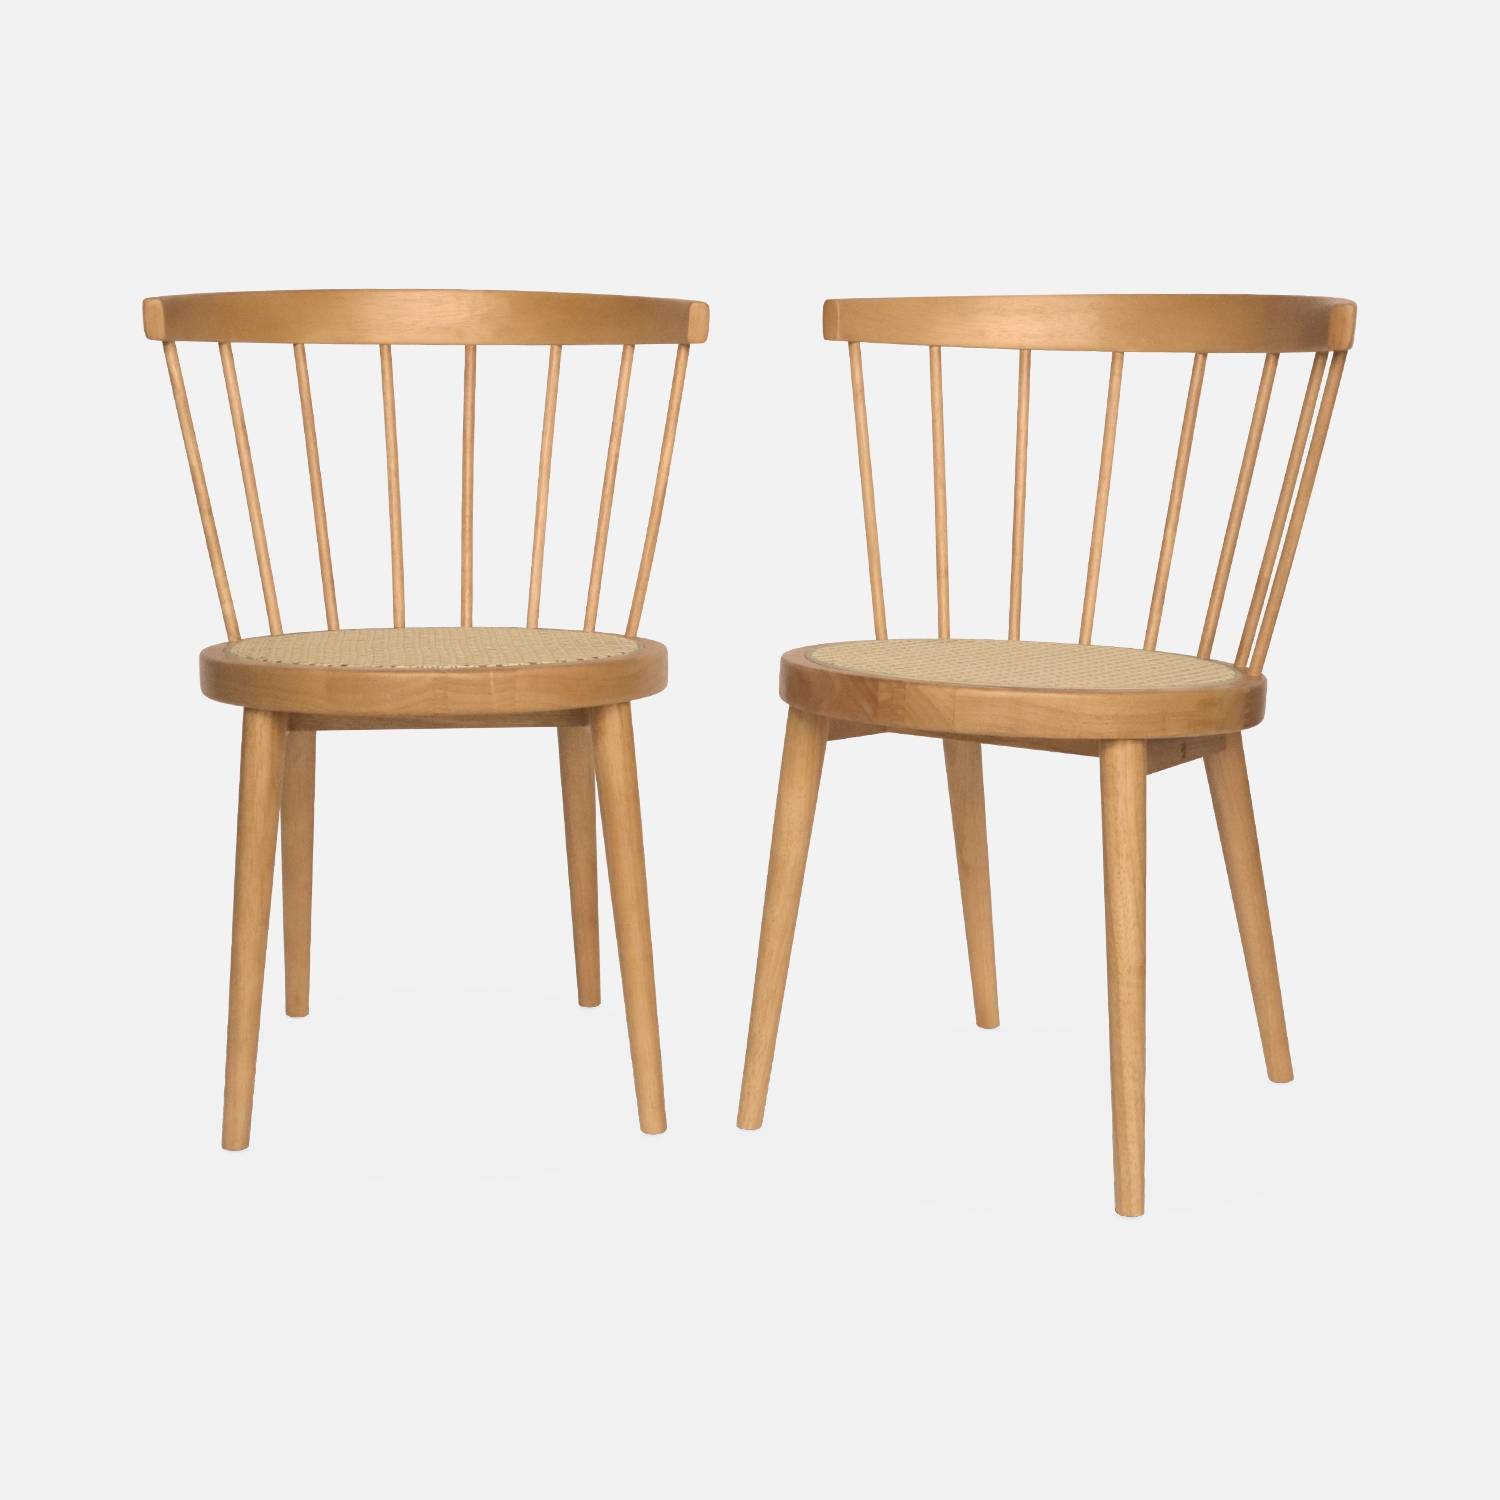 Naturelhout kleurige stoel, Nora, B 54 x D 54 x H 76,5cm, set van 2 | sweeek